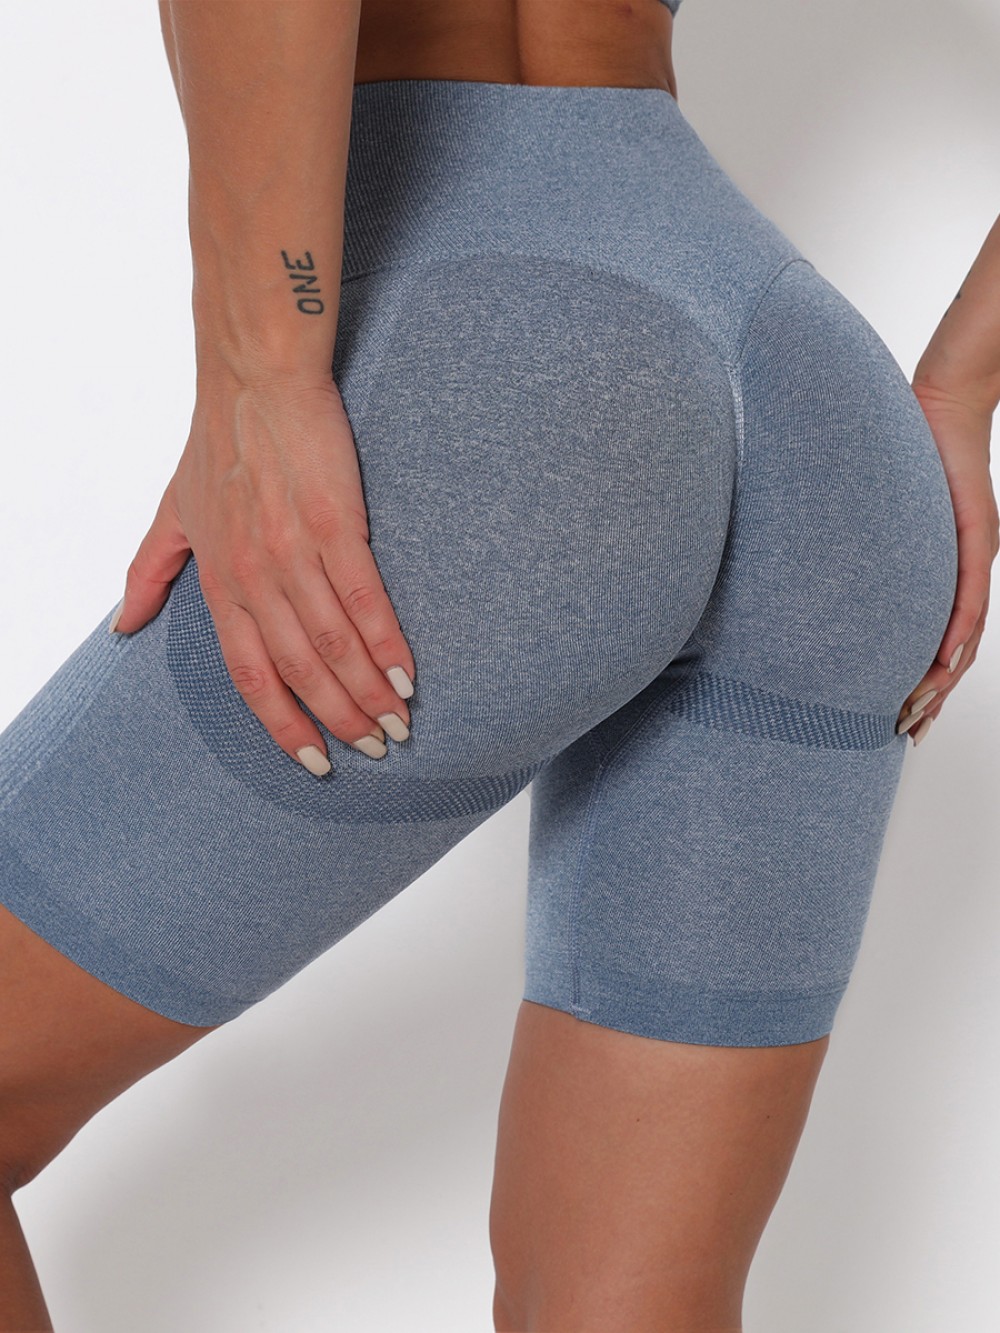 Blue Thigh Length Seamless Yoga Shorts Trend For Women